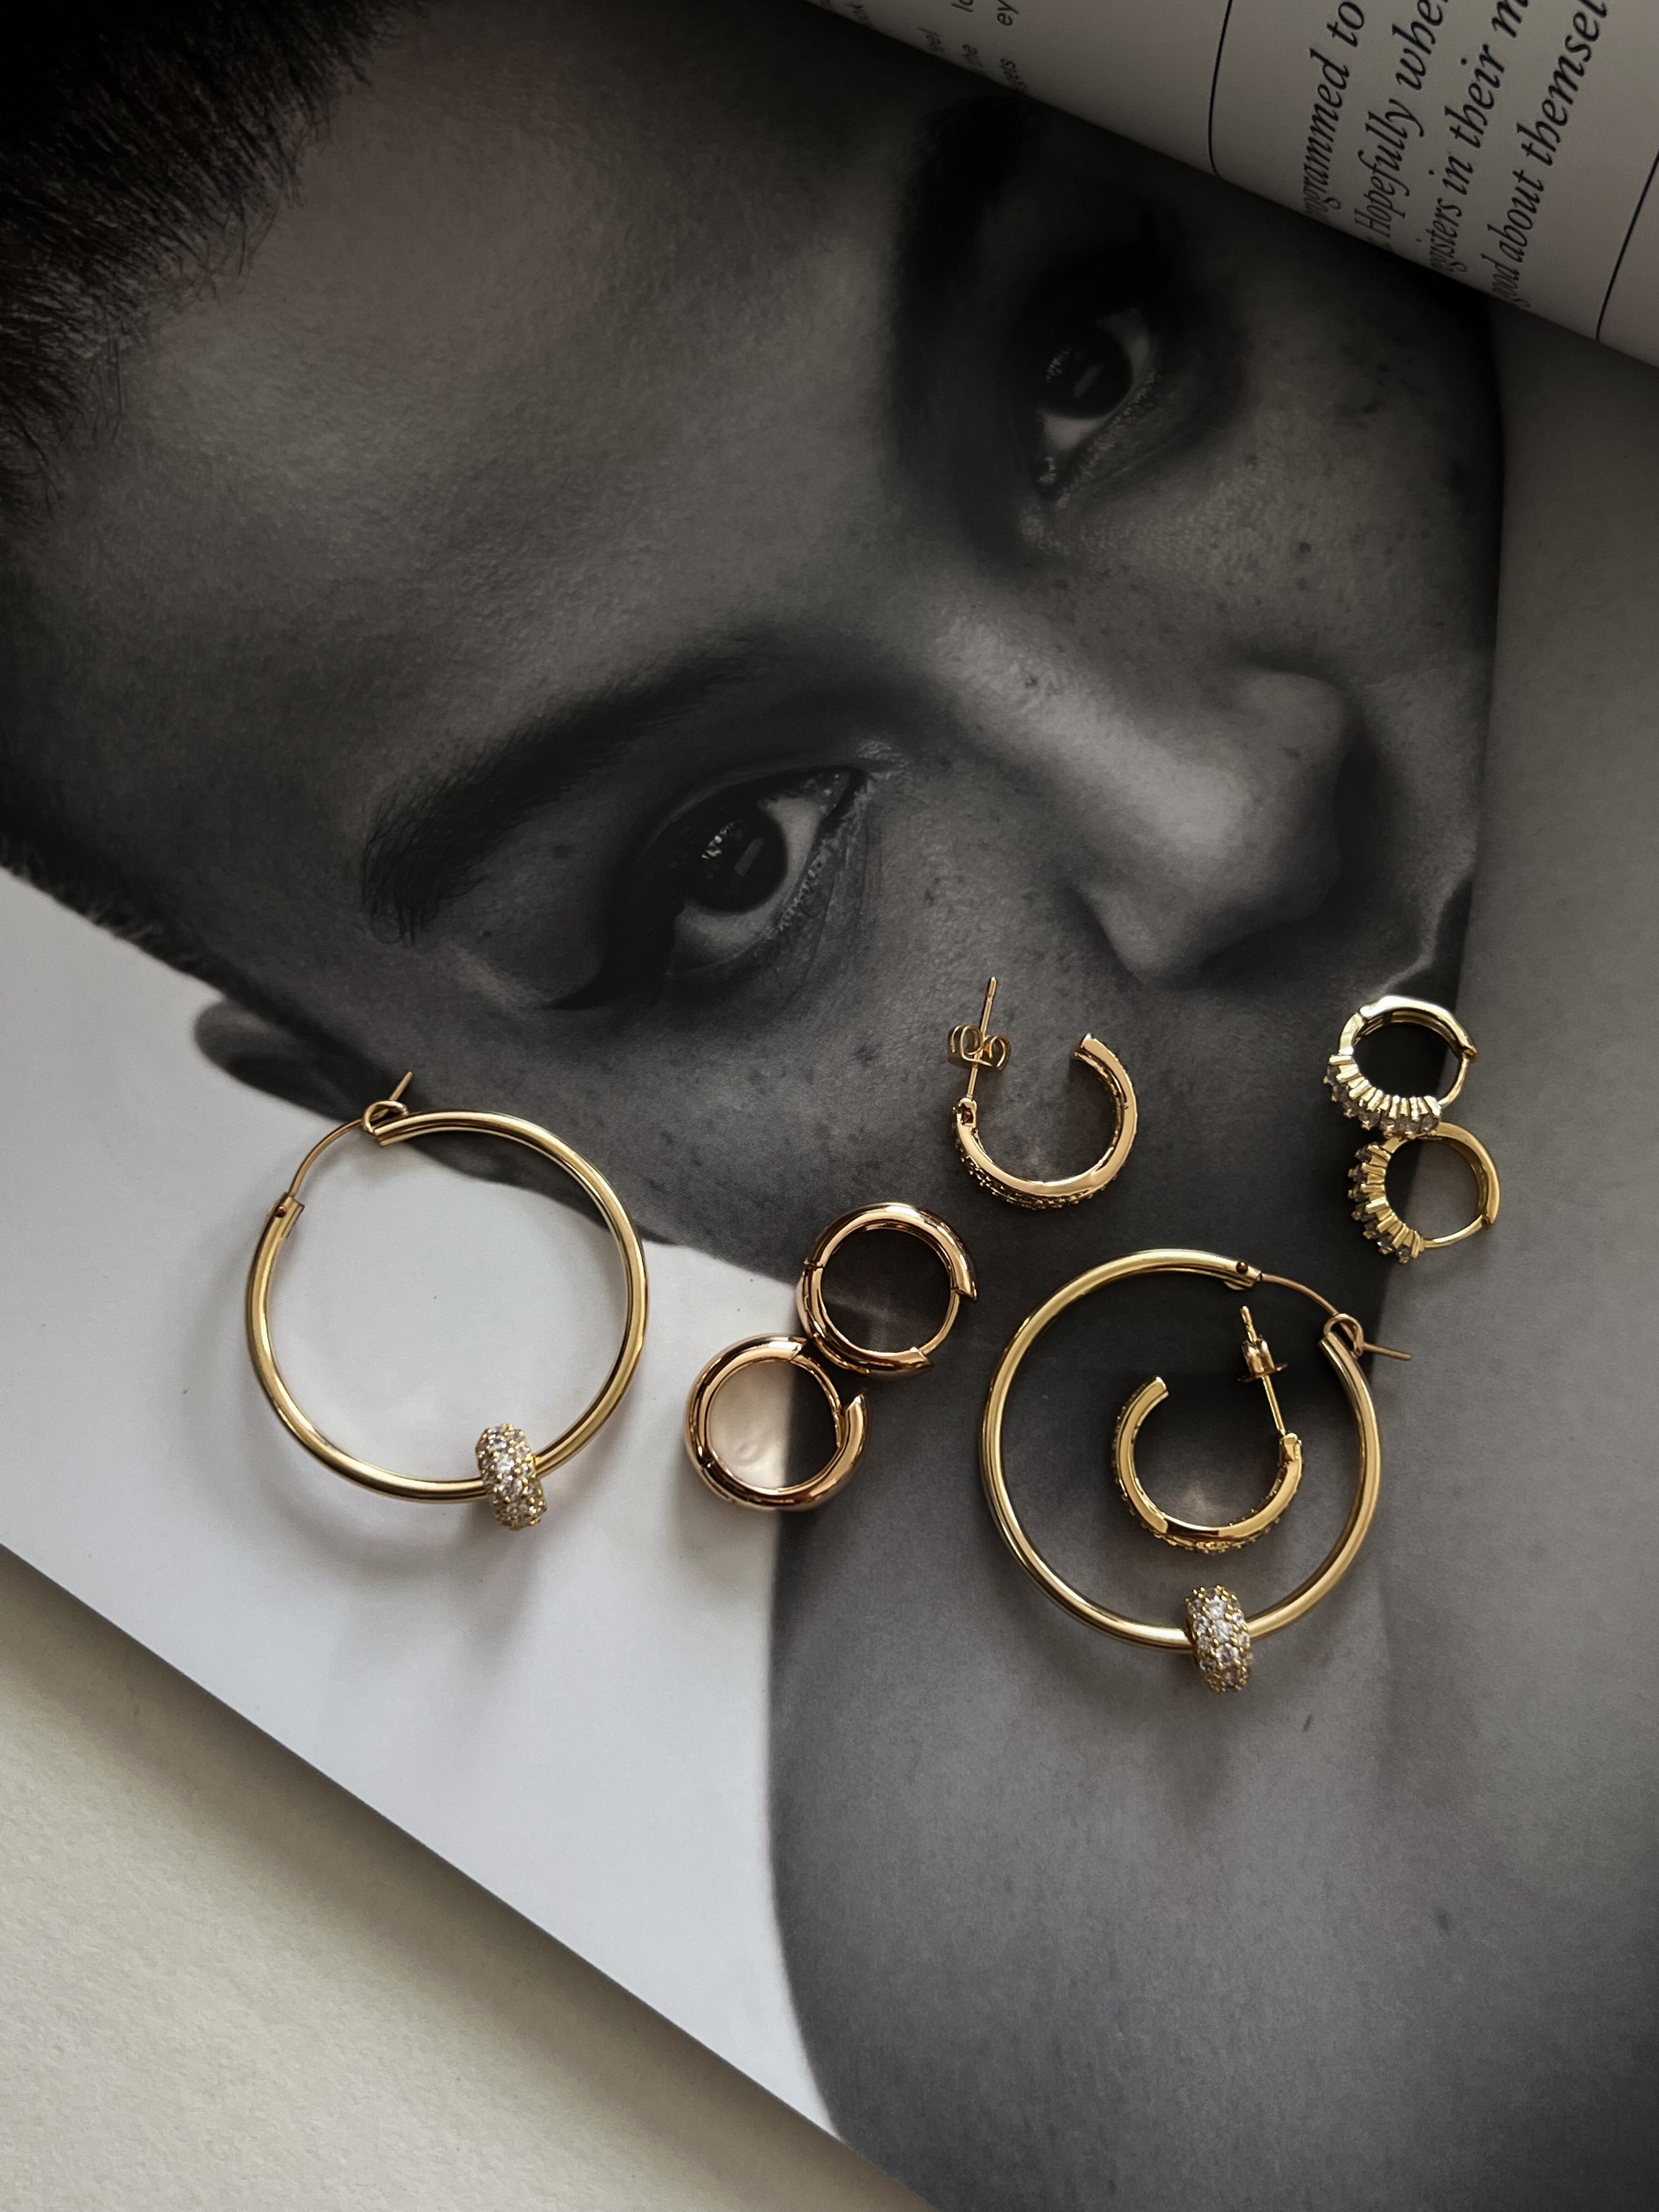 waterproof-jewelry-earrings-necklaces-gold-filled